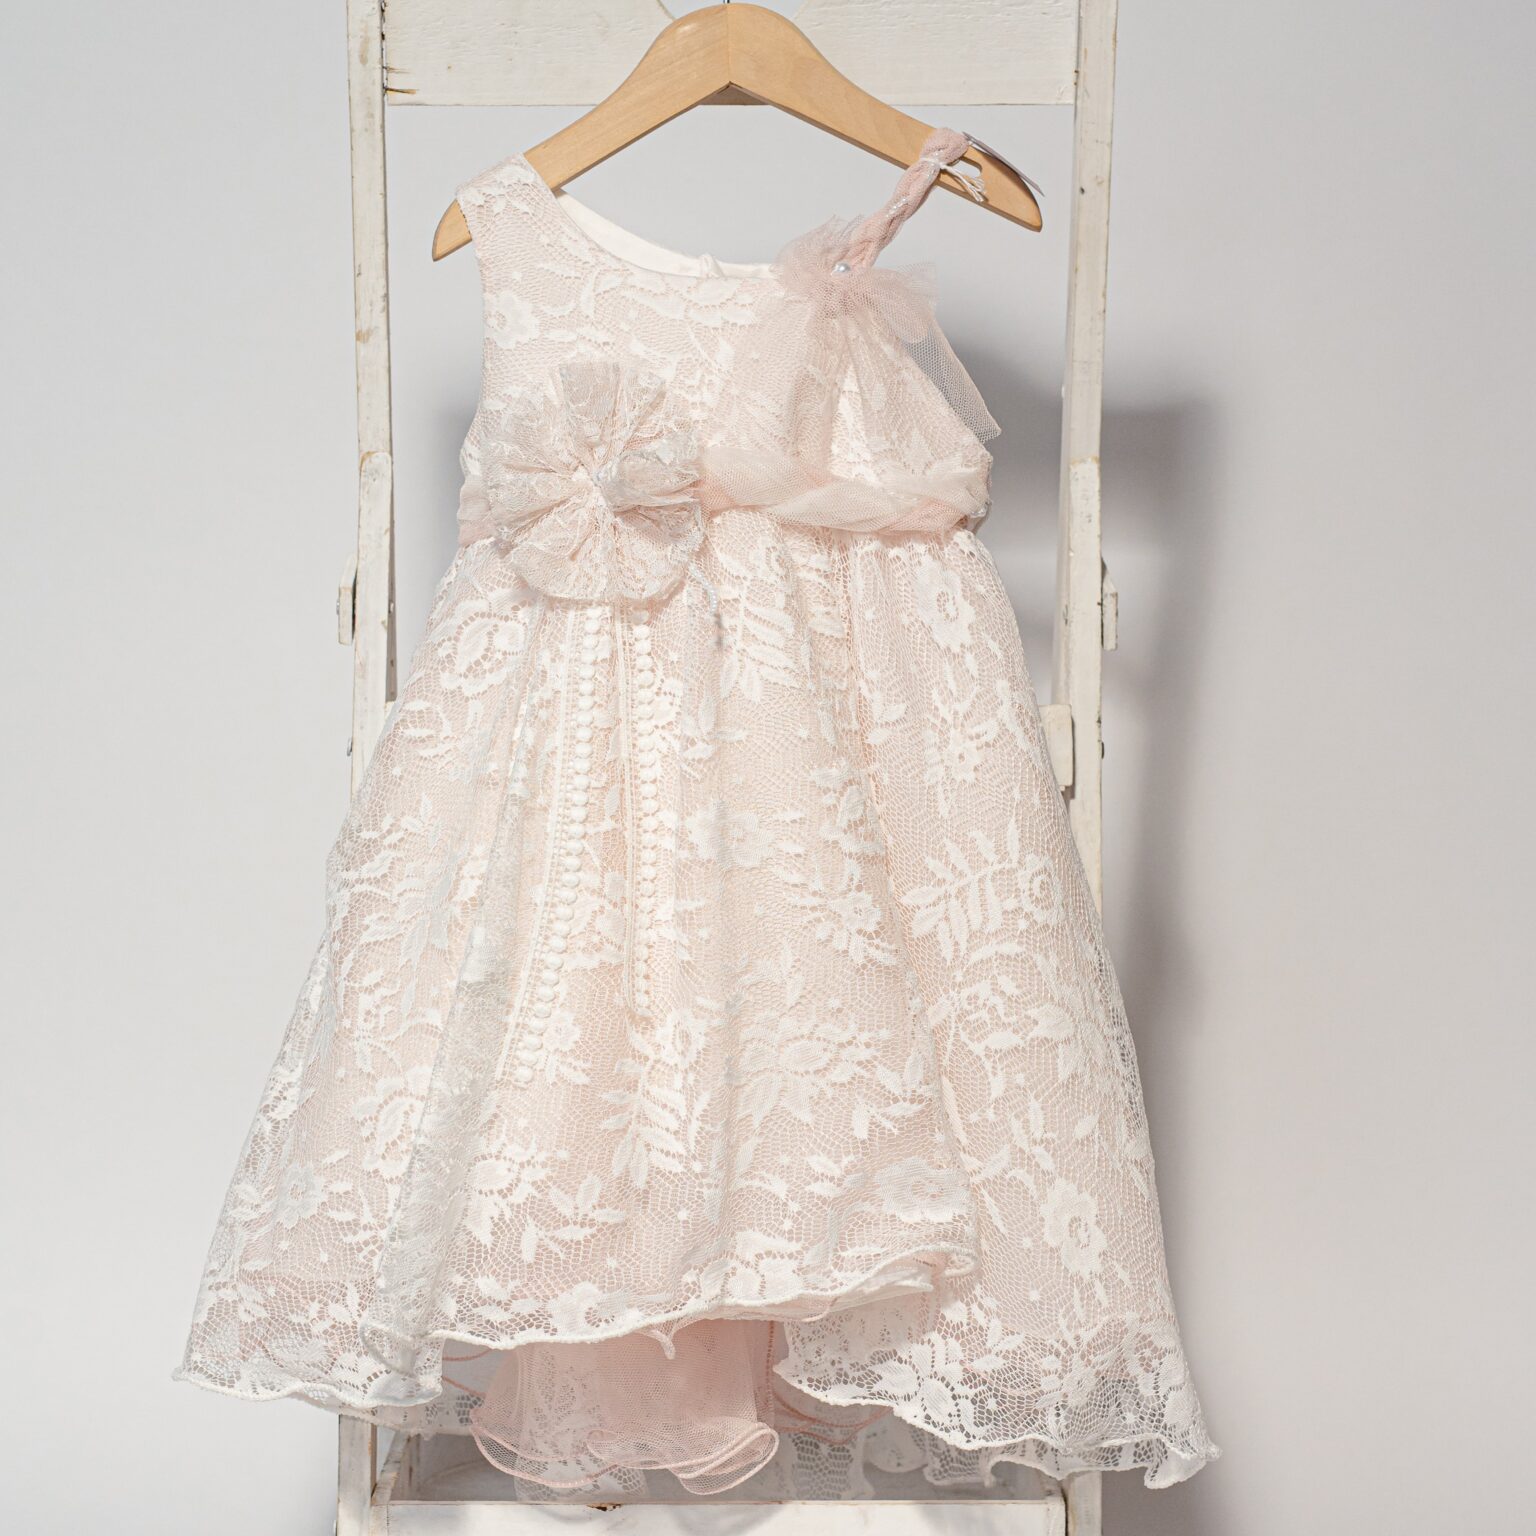 Vintage βαπτιστικό φόρεμα σε απαλό ροζ δαντέλα